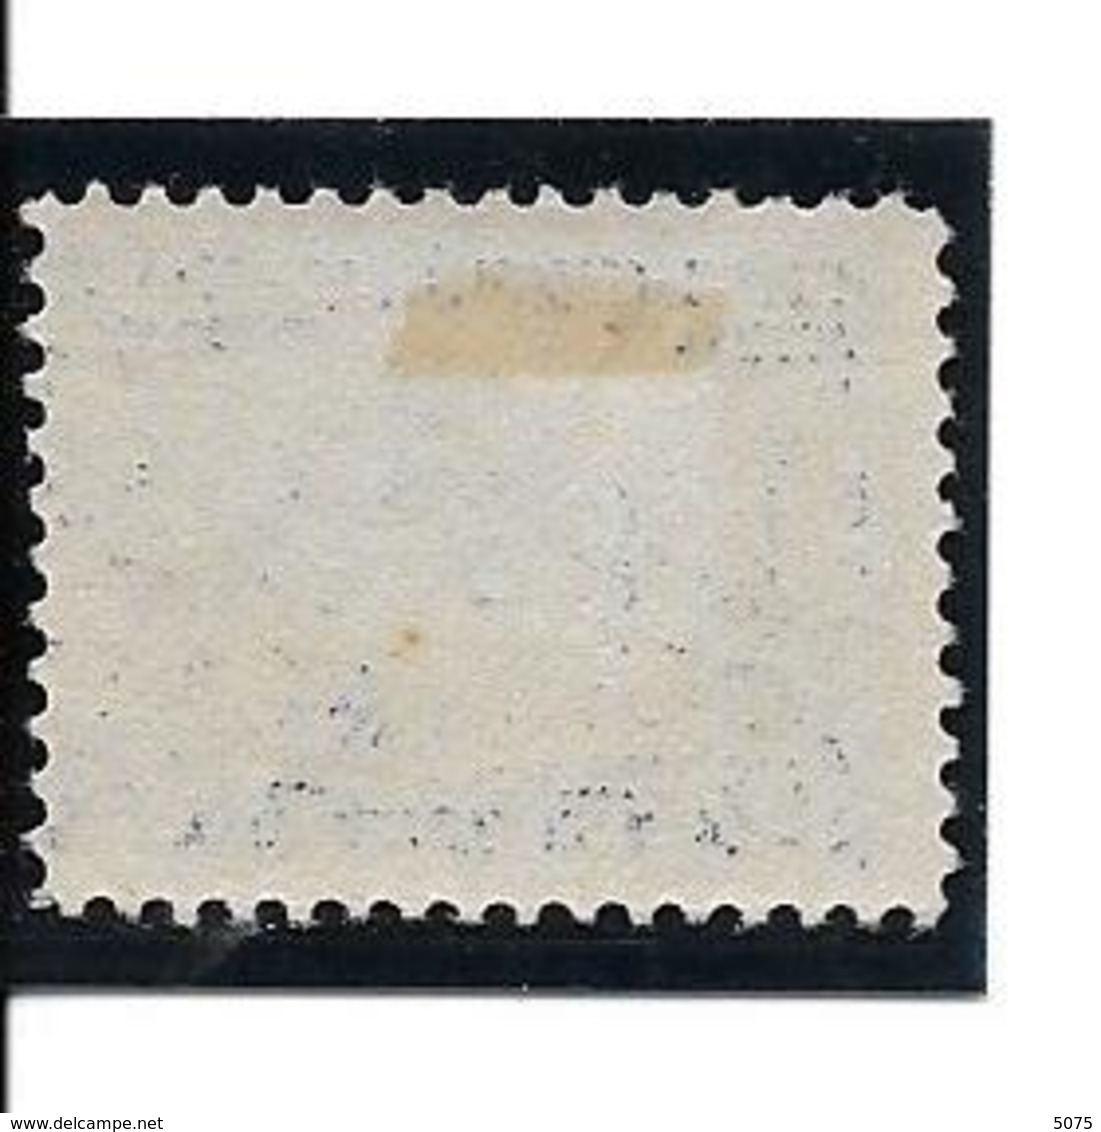 1920 5cs Bleu PILGRIM TERCENTENARY  Neuf  Yvert 227* - Unused Stamps